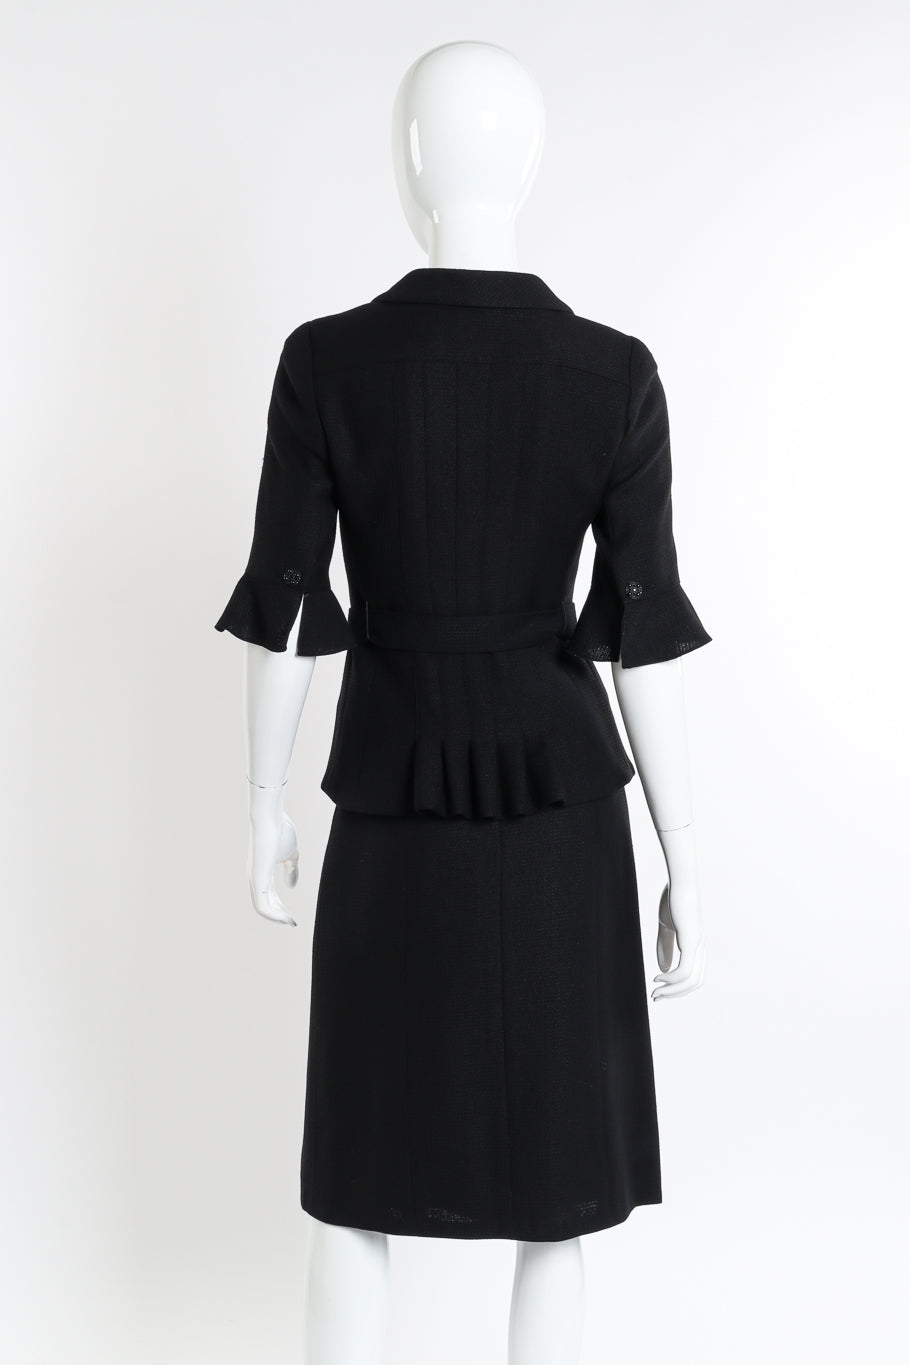 Chanel 2007C S/S Peplum Skirt Suit back on mannequin @recessla